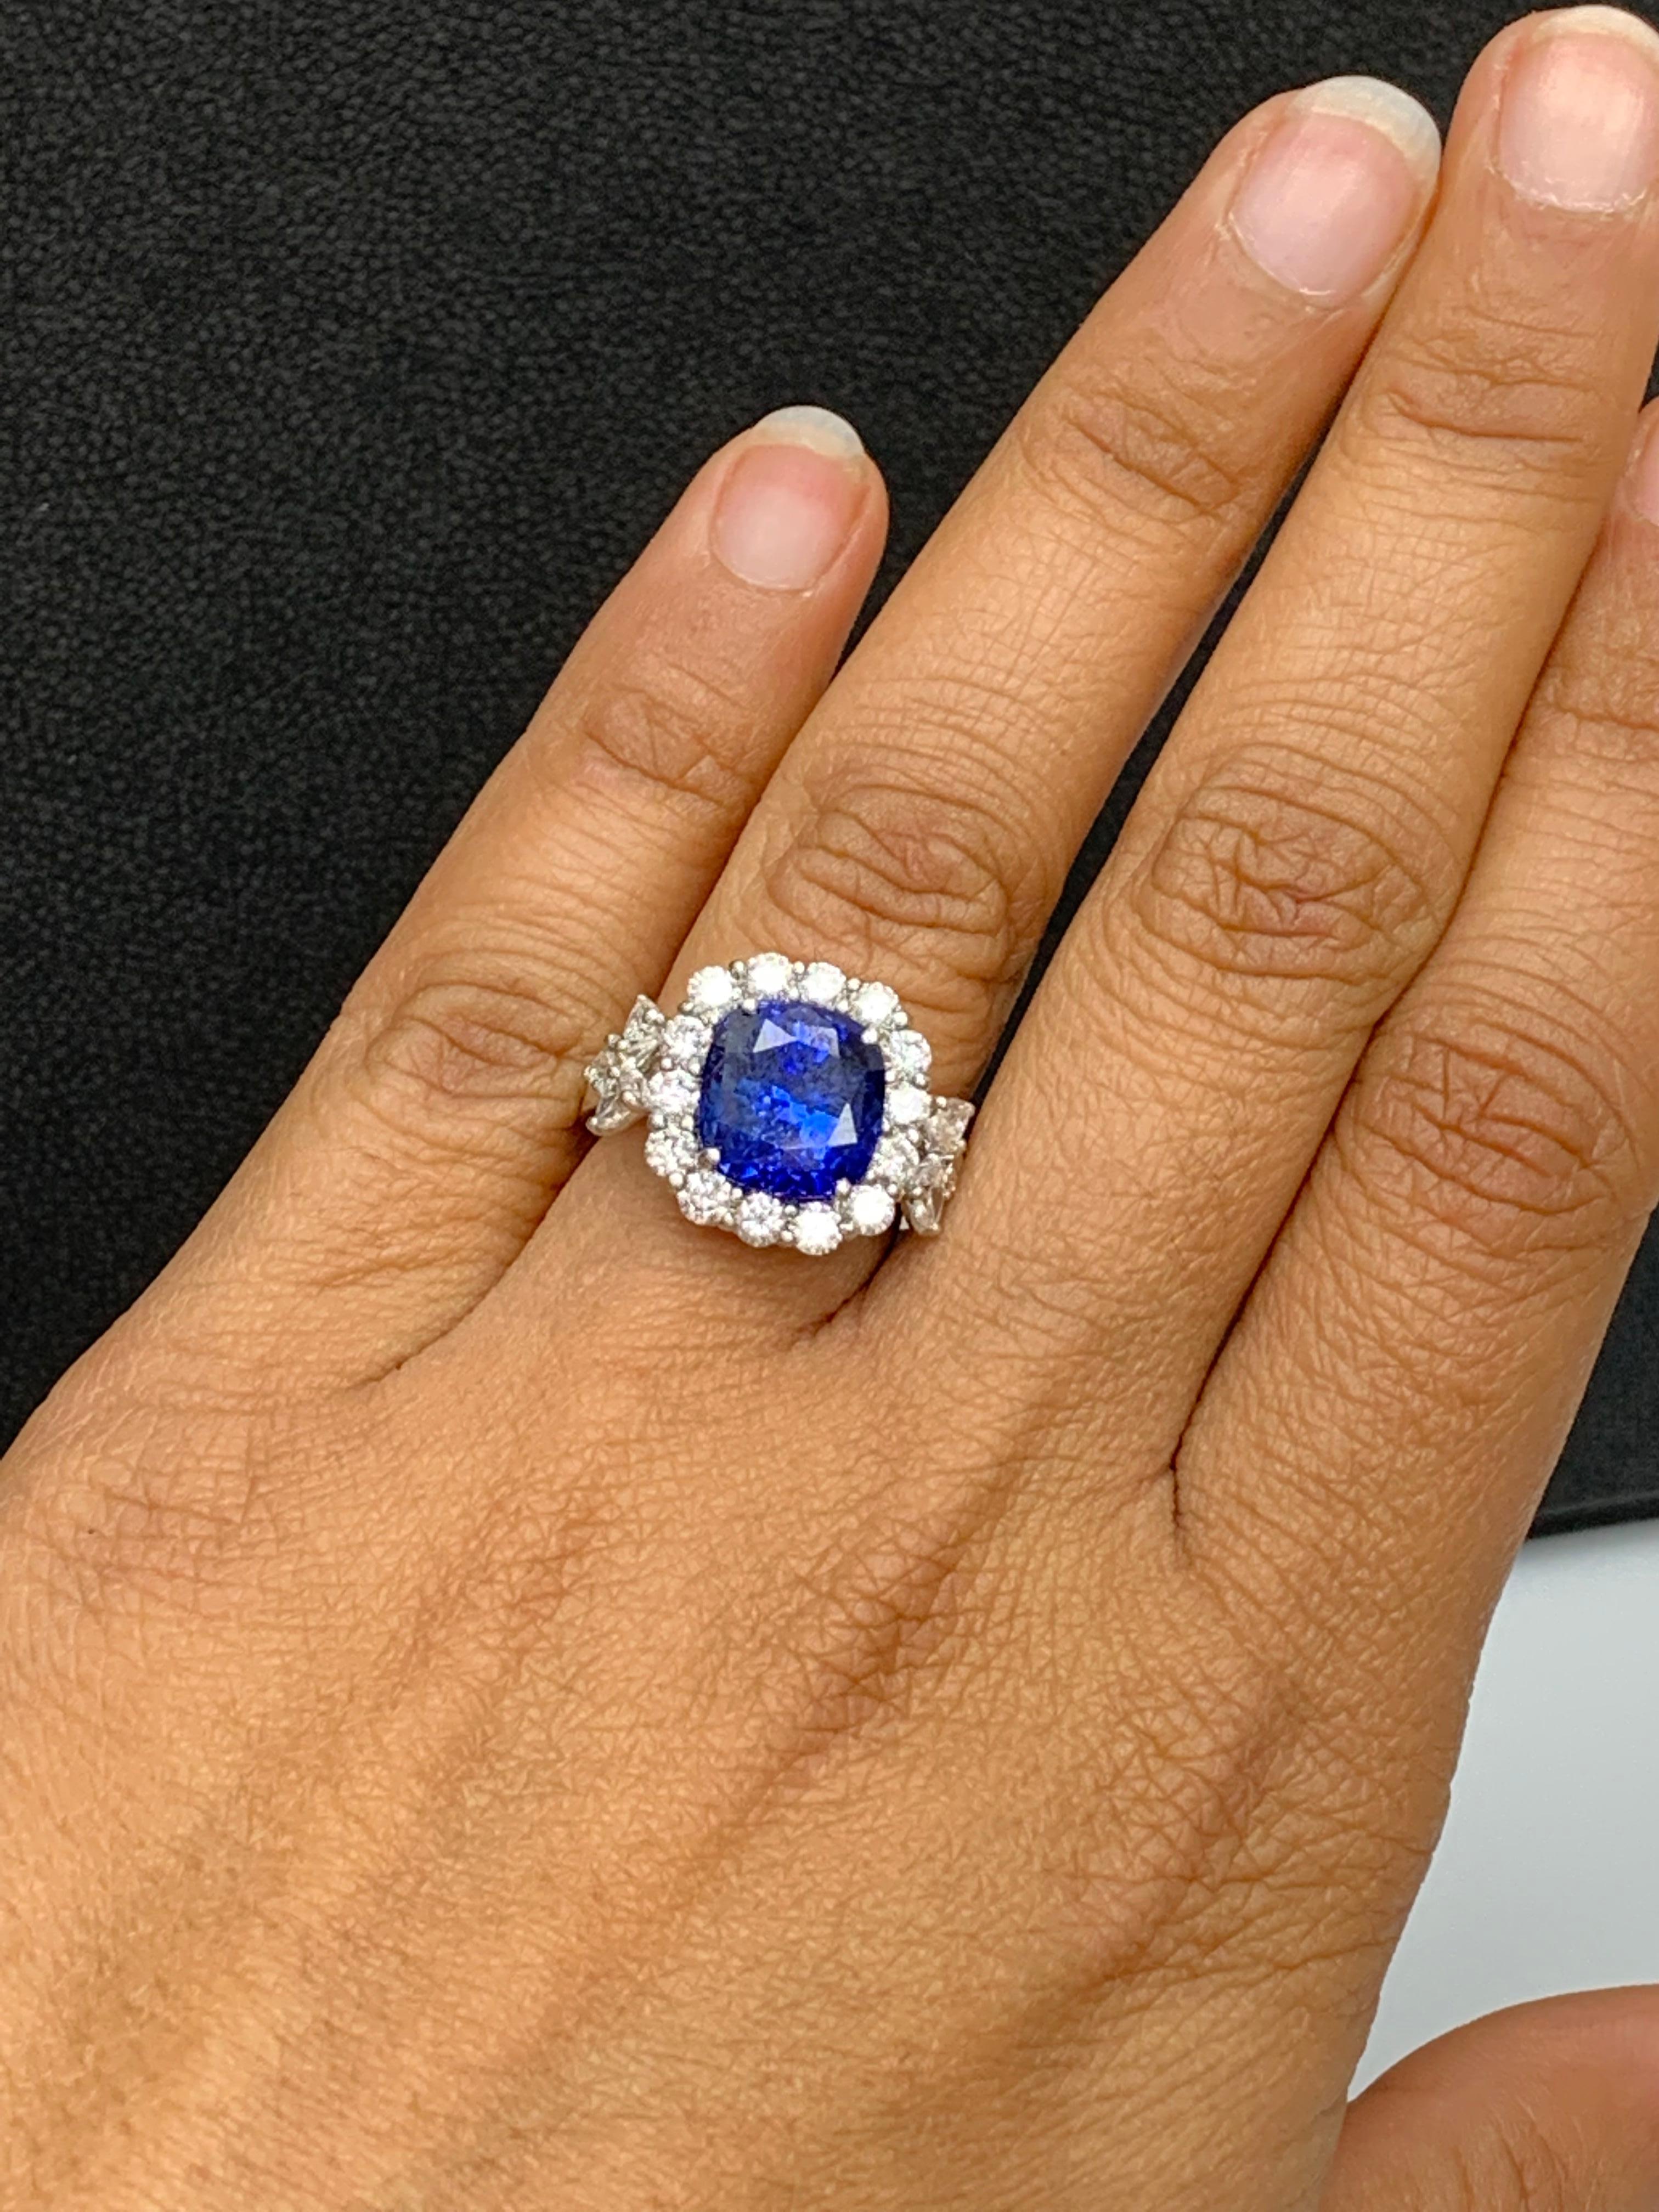 6.61 Carat Cushion Cut Blue Sapphire Diamond Engagement Ring in Platinum For Sale 7